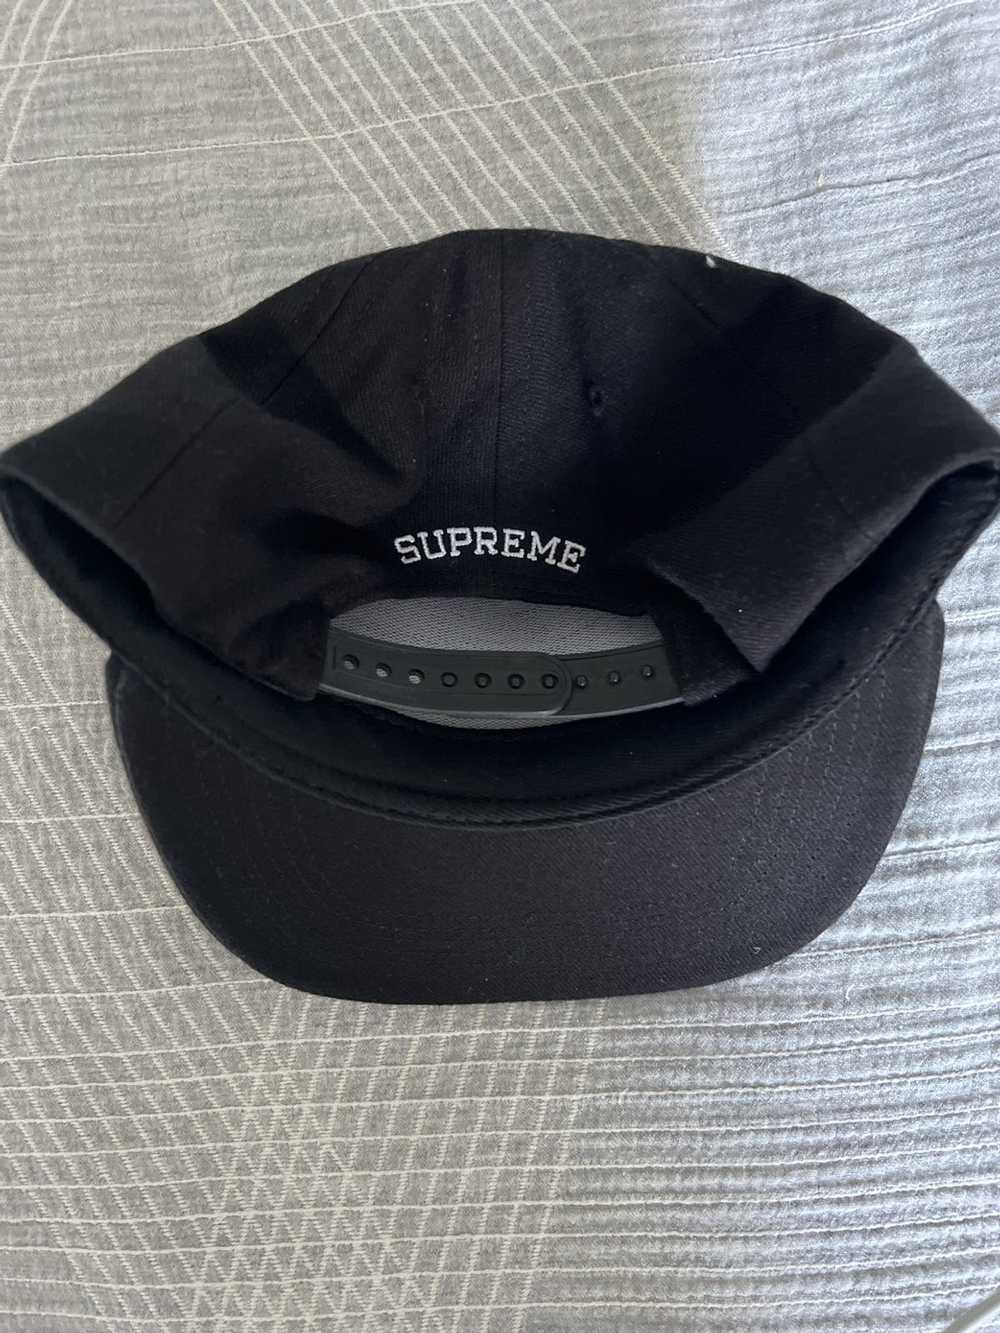 Supreme Supreme x Independent - image 4